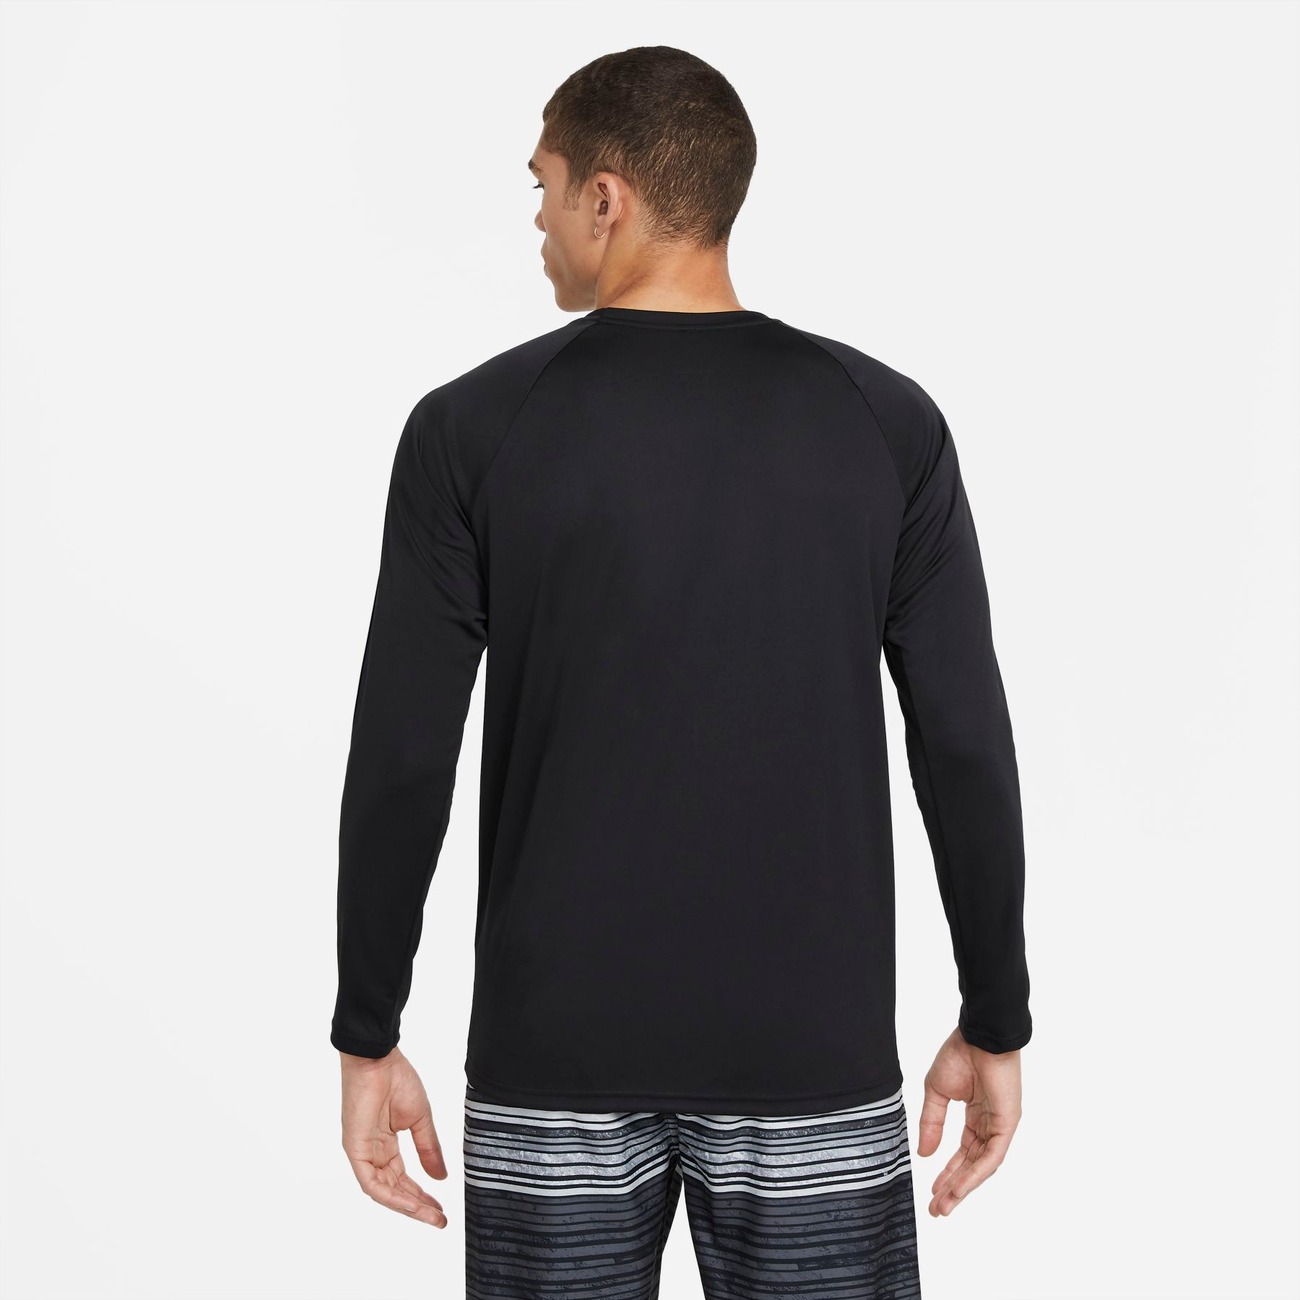 Camiseta Nike Hydroguard Essential UV Masculina - Foto 2